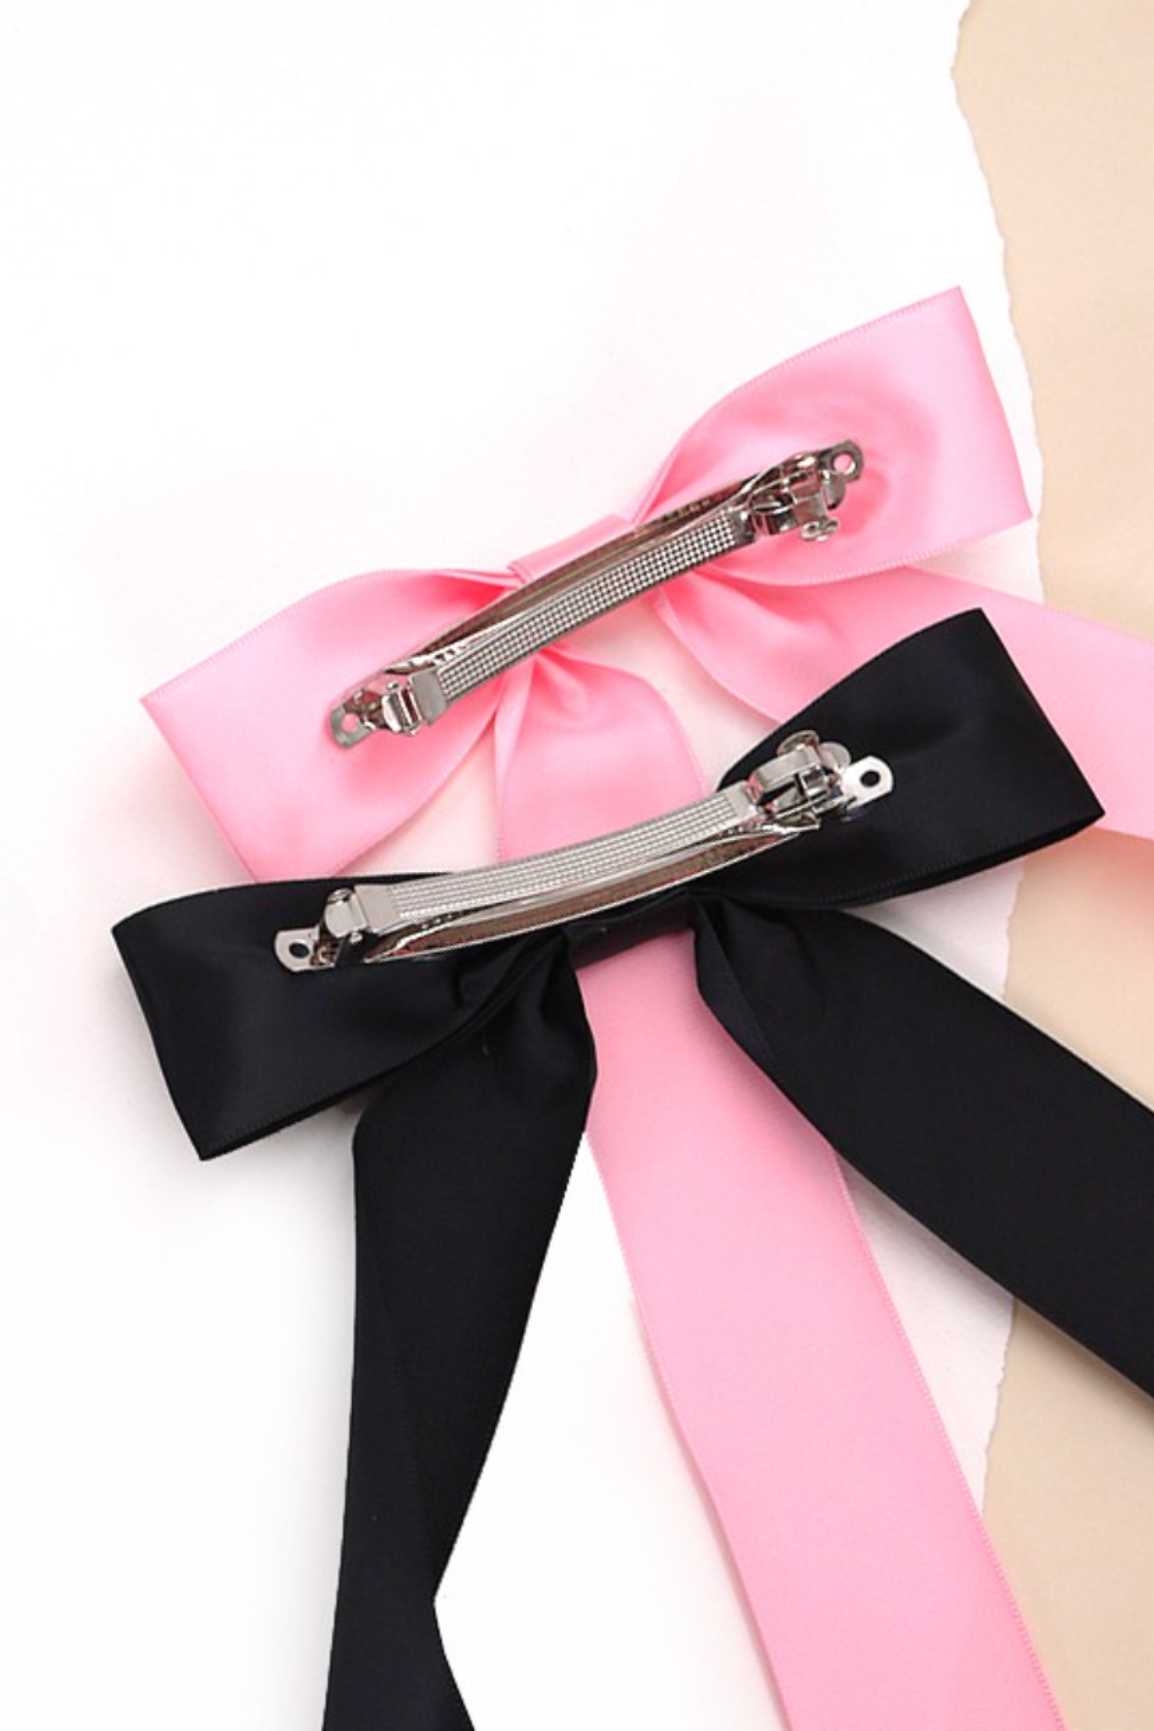 hair clip on pink and black silk hair bow